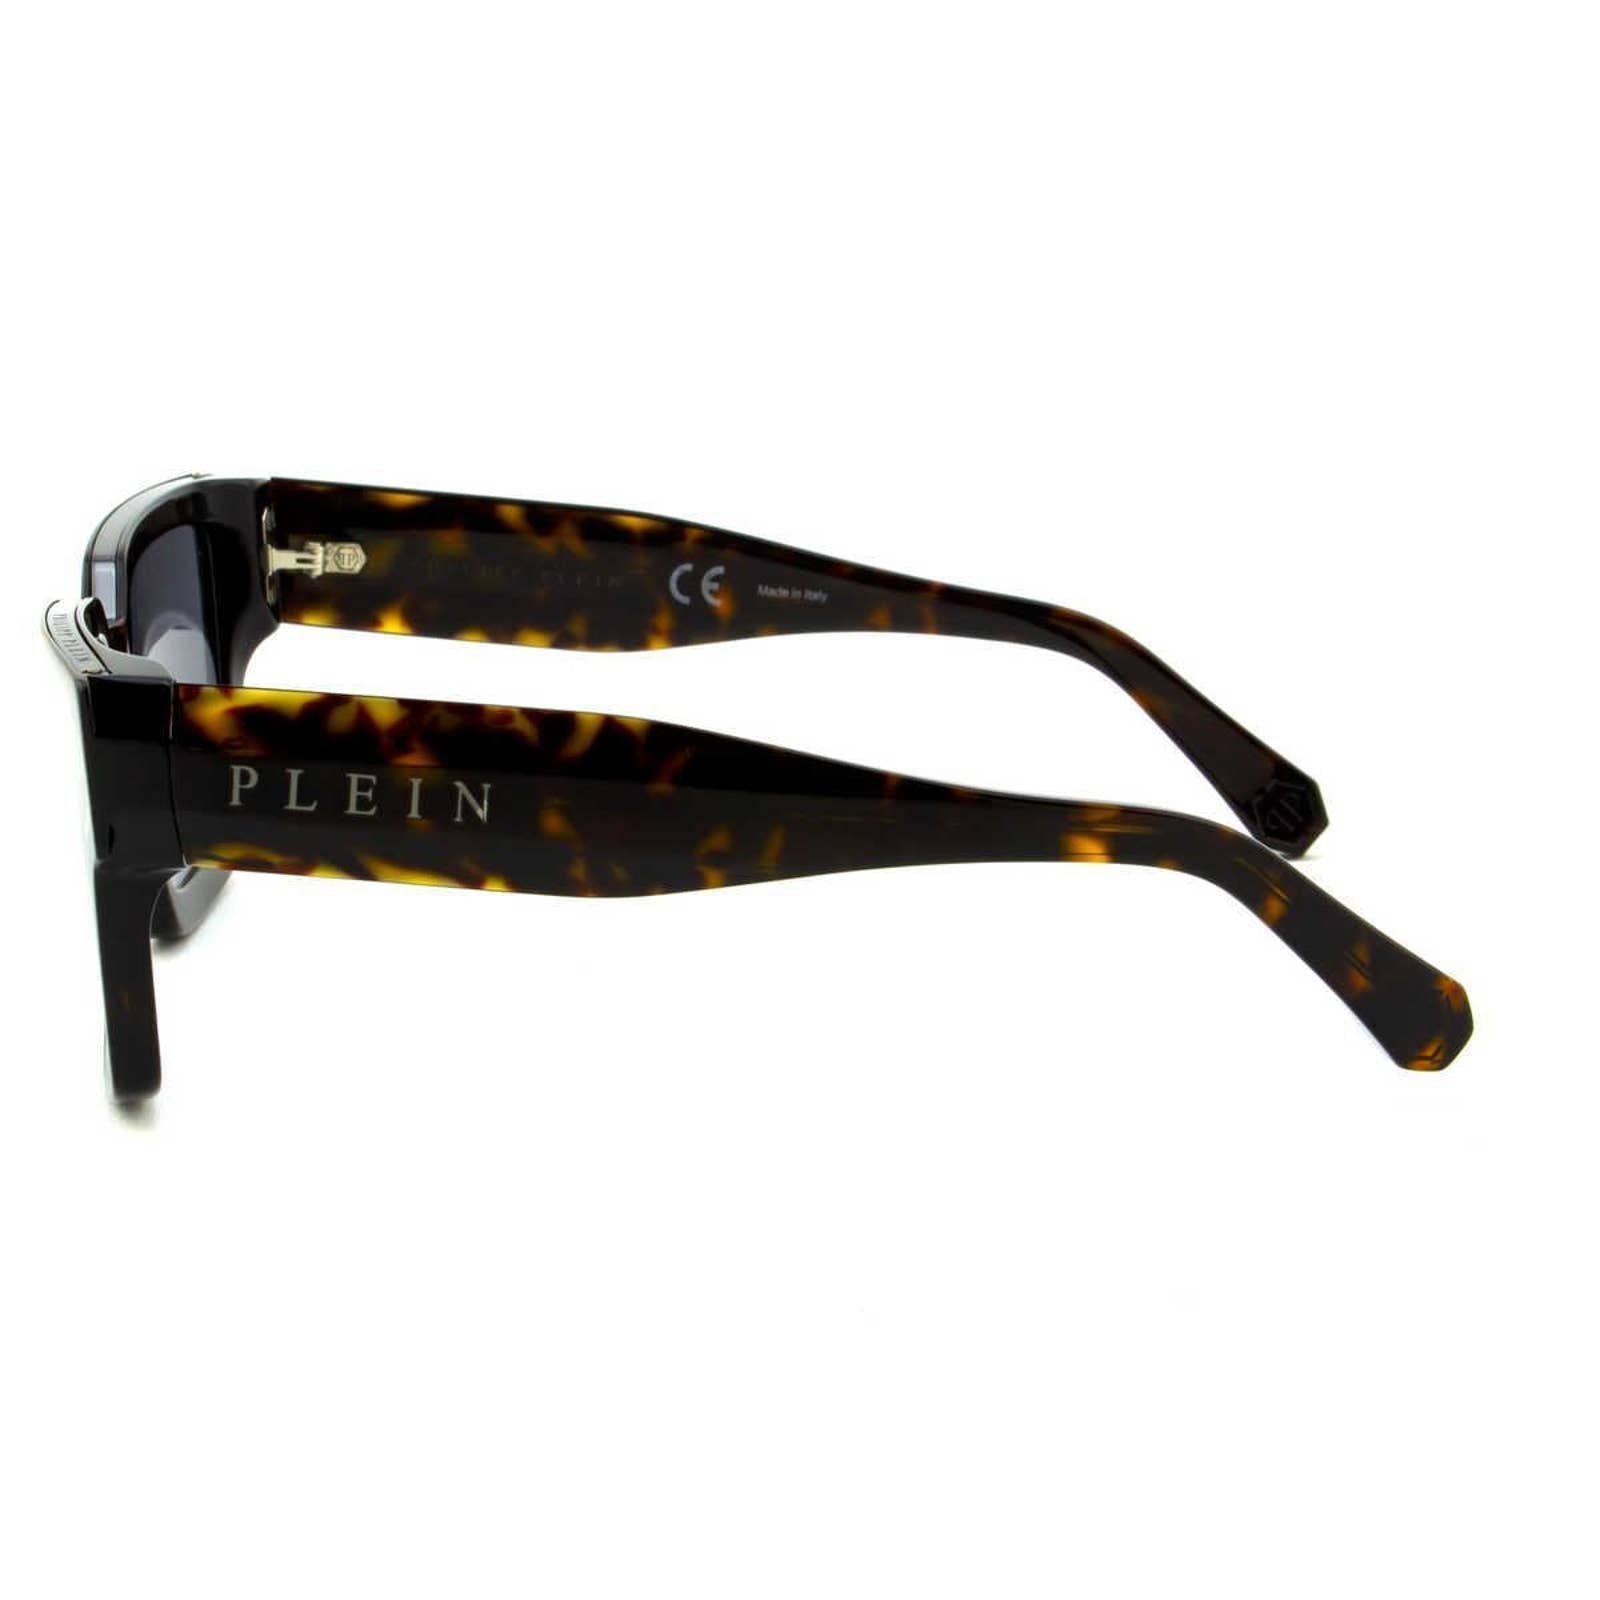 Men Havana Brown Square Sunglasses SPP005M-722X Havana Brown Acetate & Silver